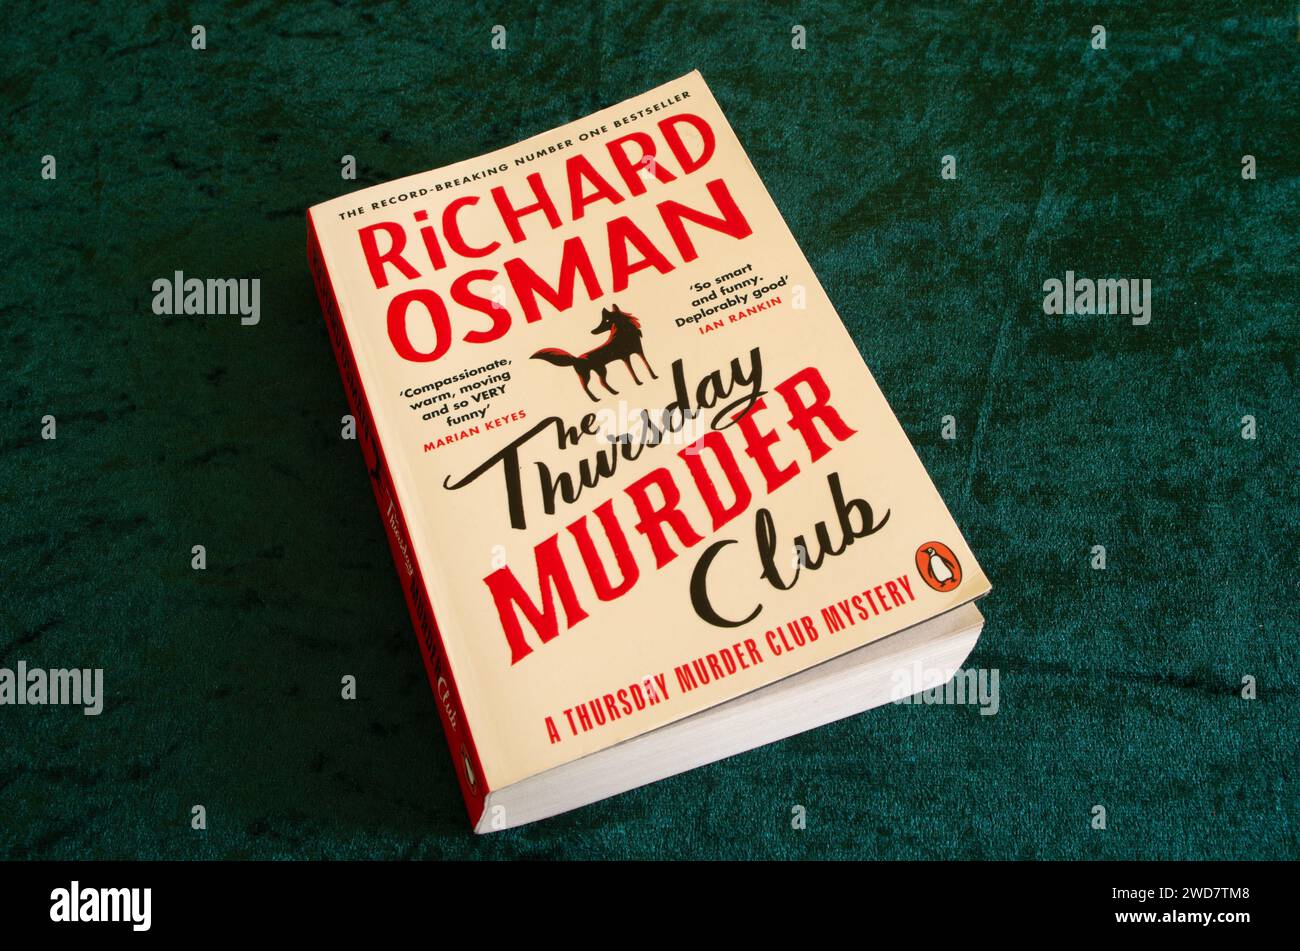 Richard Osman The Thursday Murder Club Paperback Fictional Novel Published By Penguin Books Stock Photo